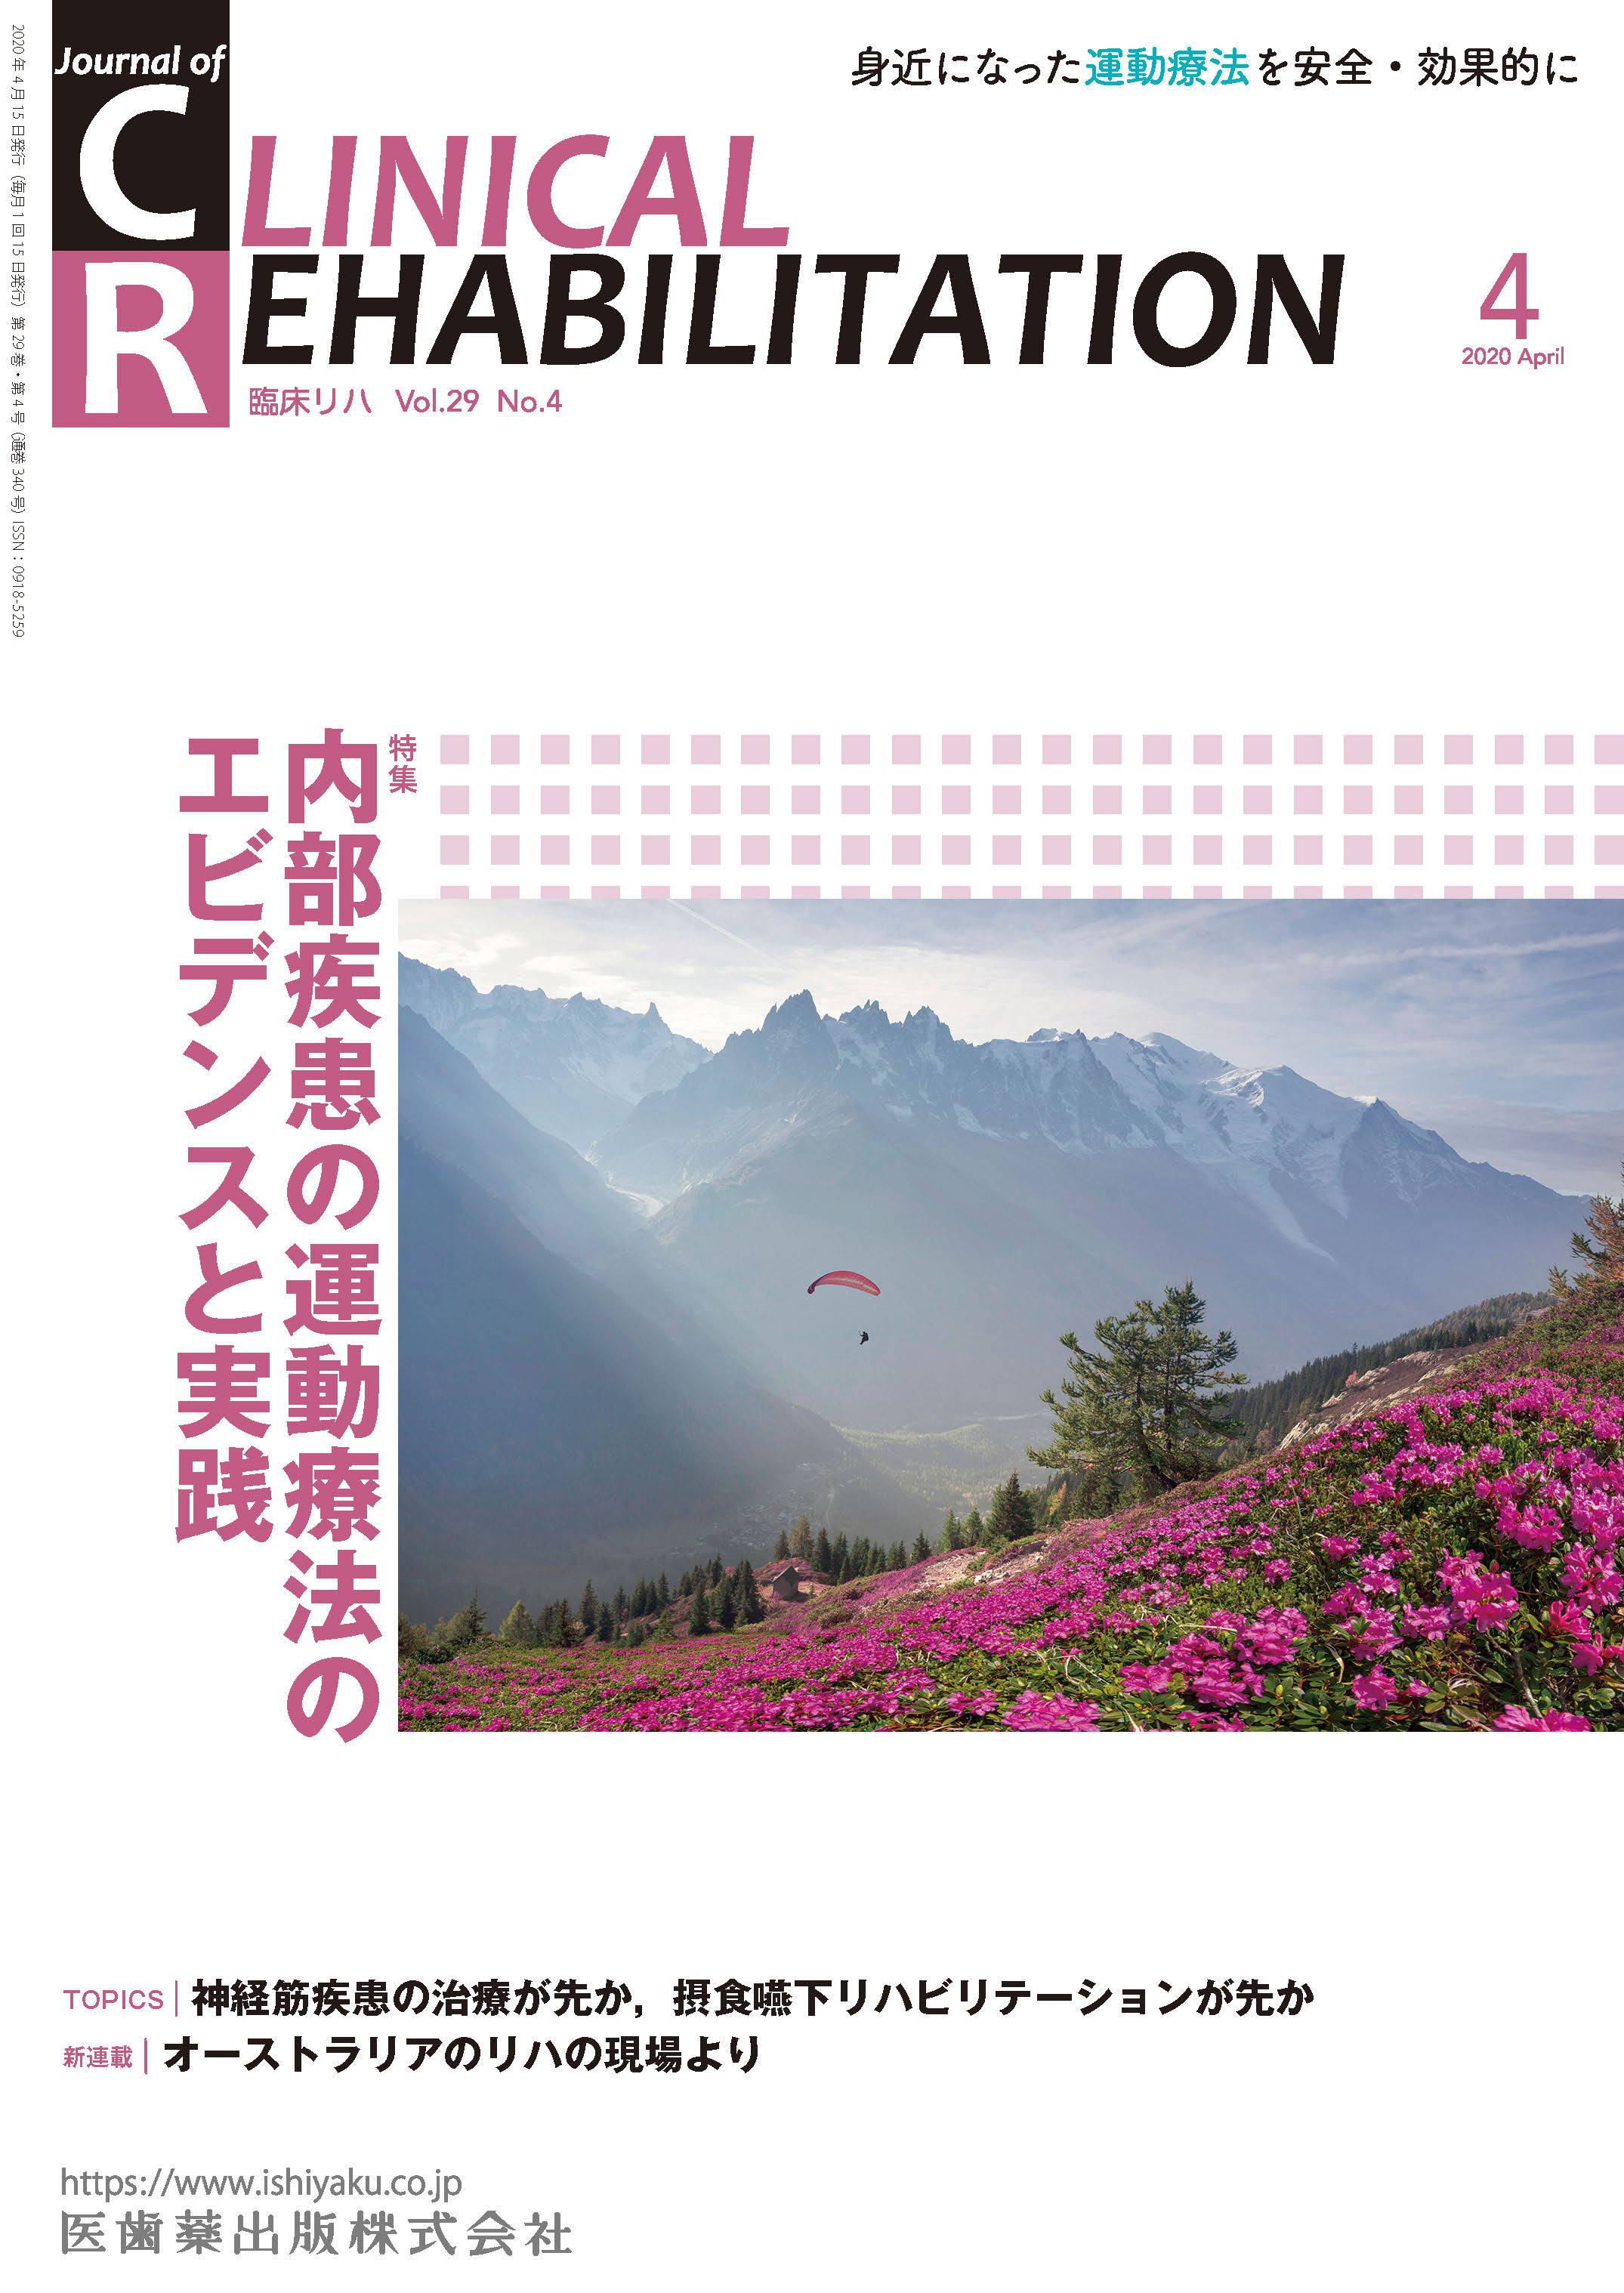 J. of Clinical Rehabilitation 巻4号電子版   医書.jp